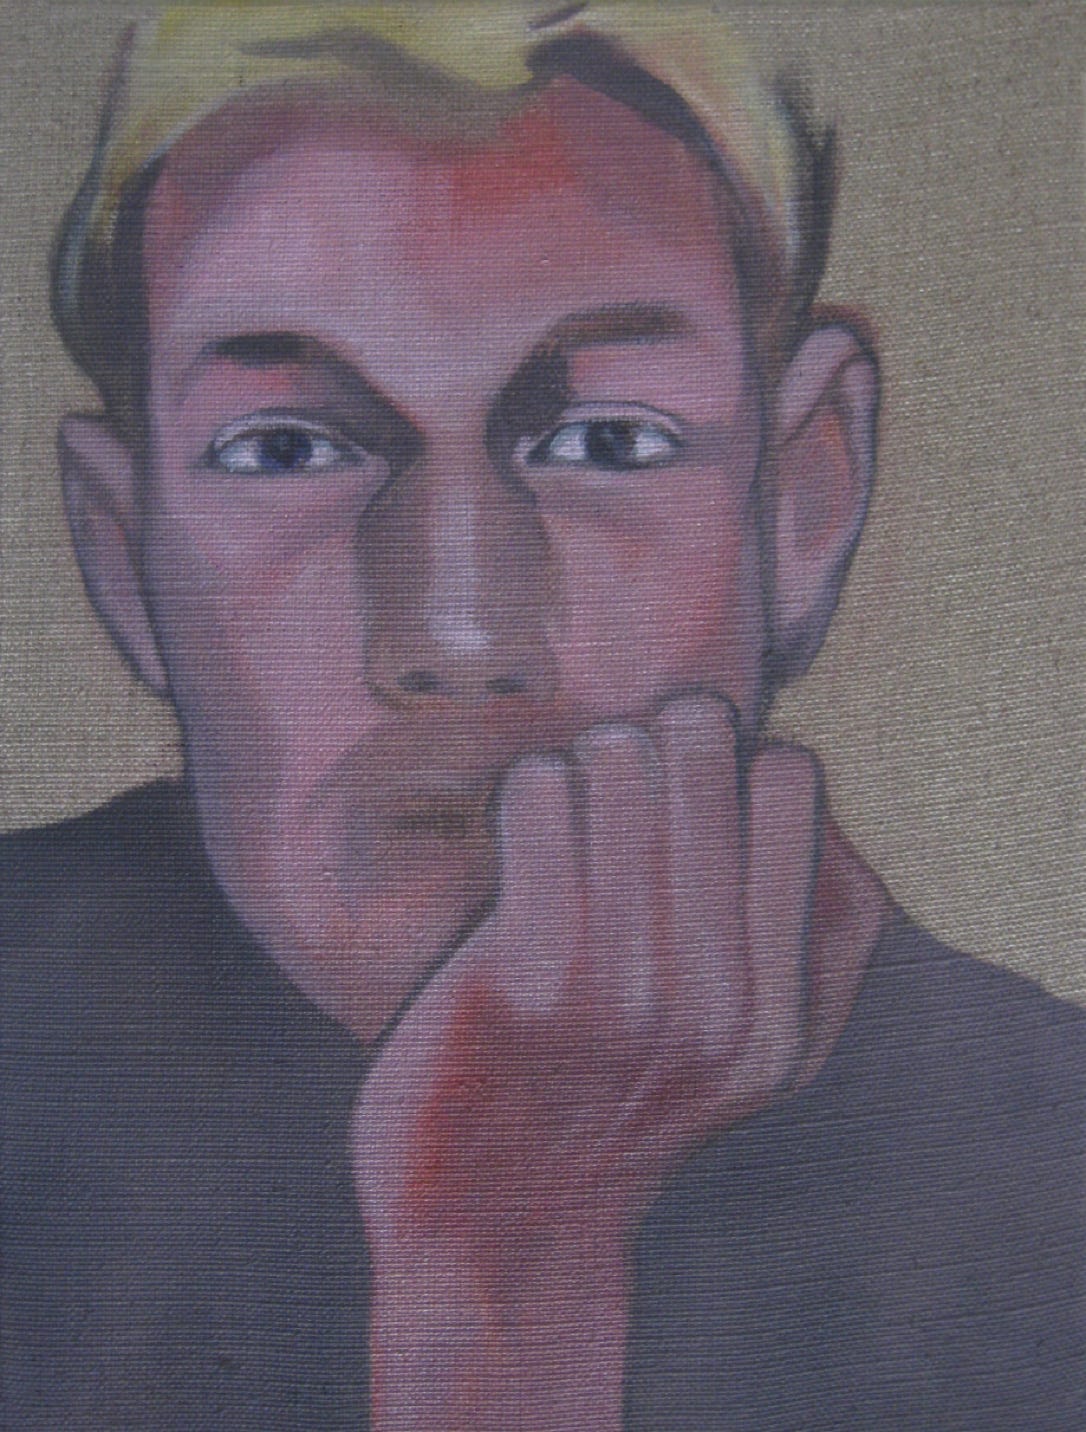 40x30 cm, oil on canvas, 2016